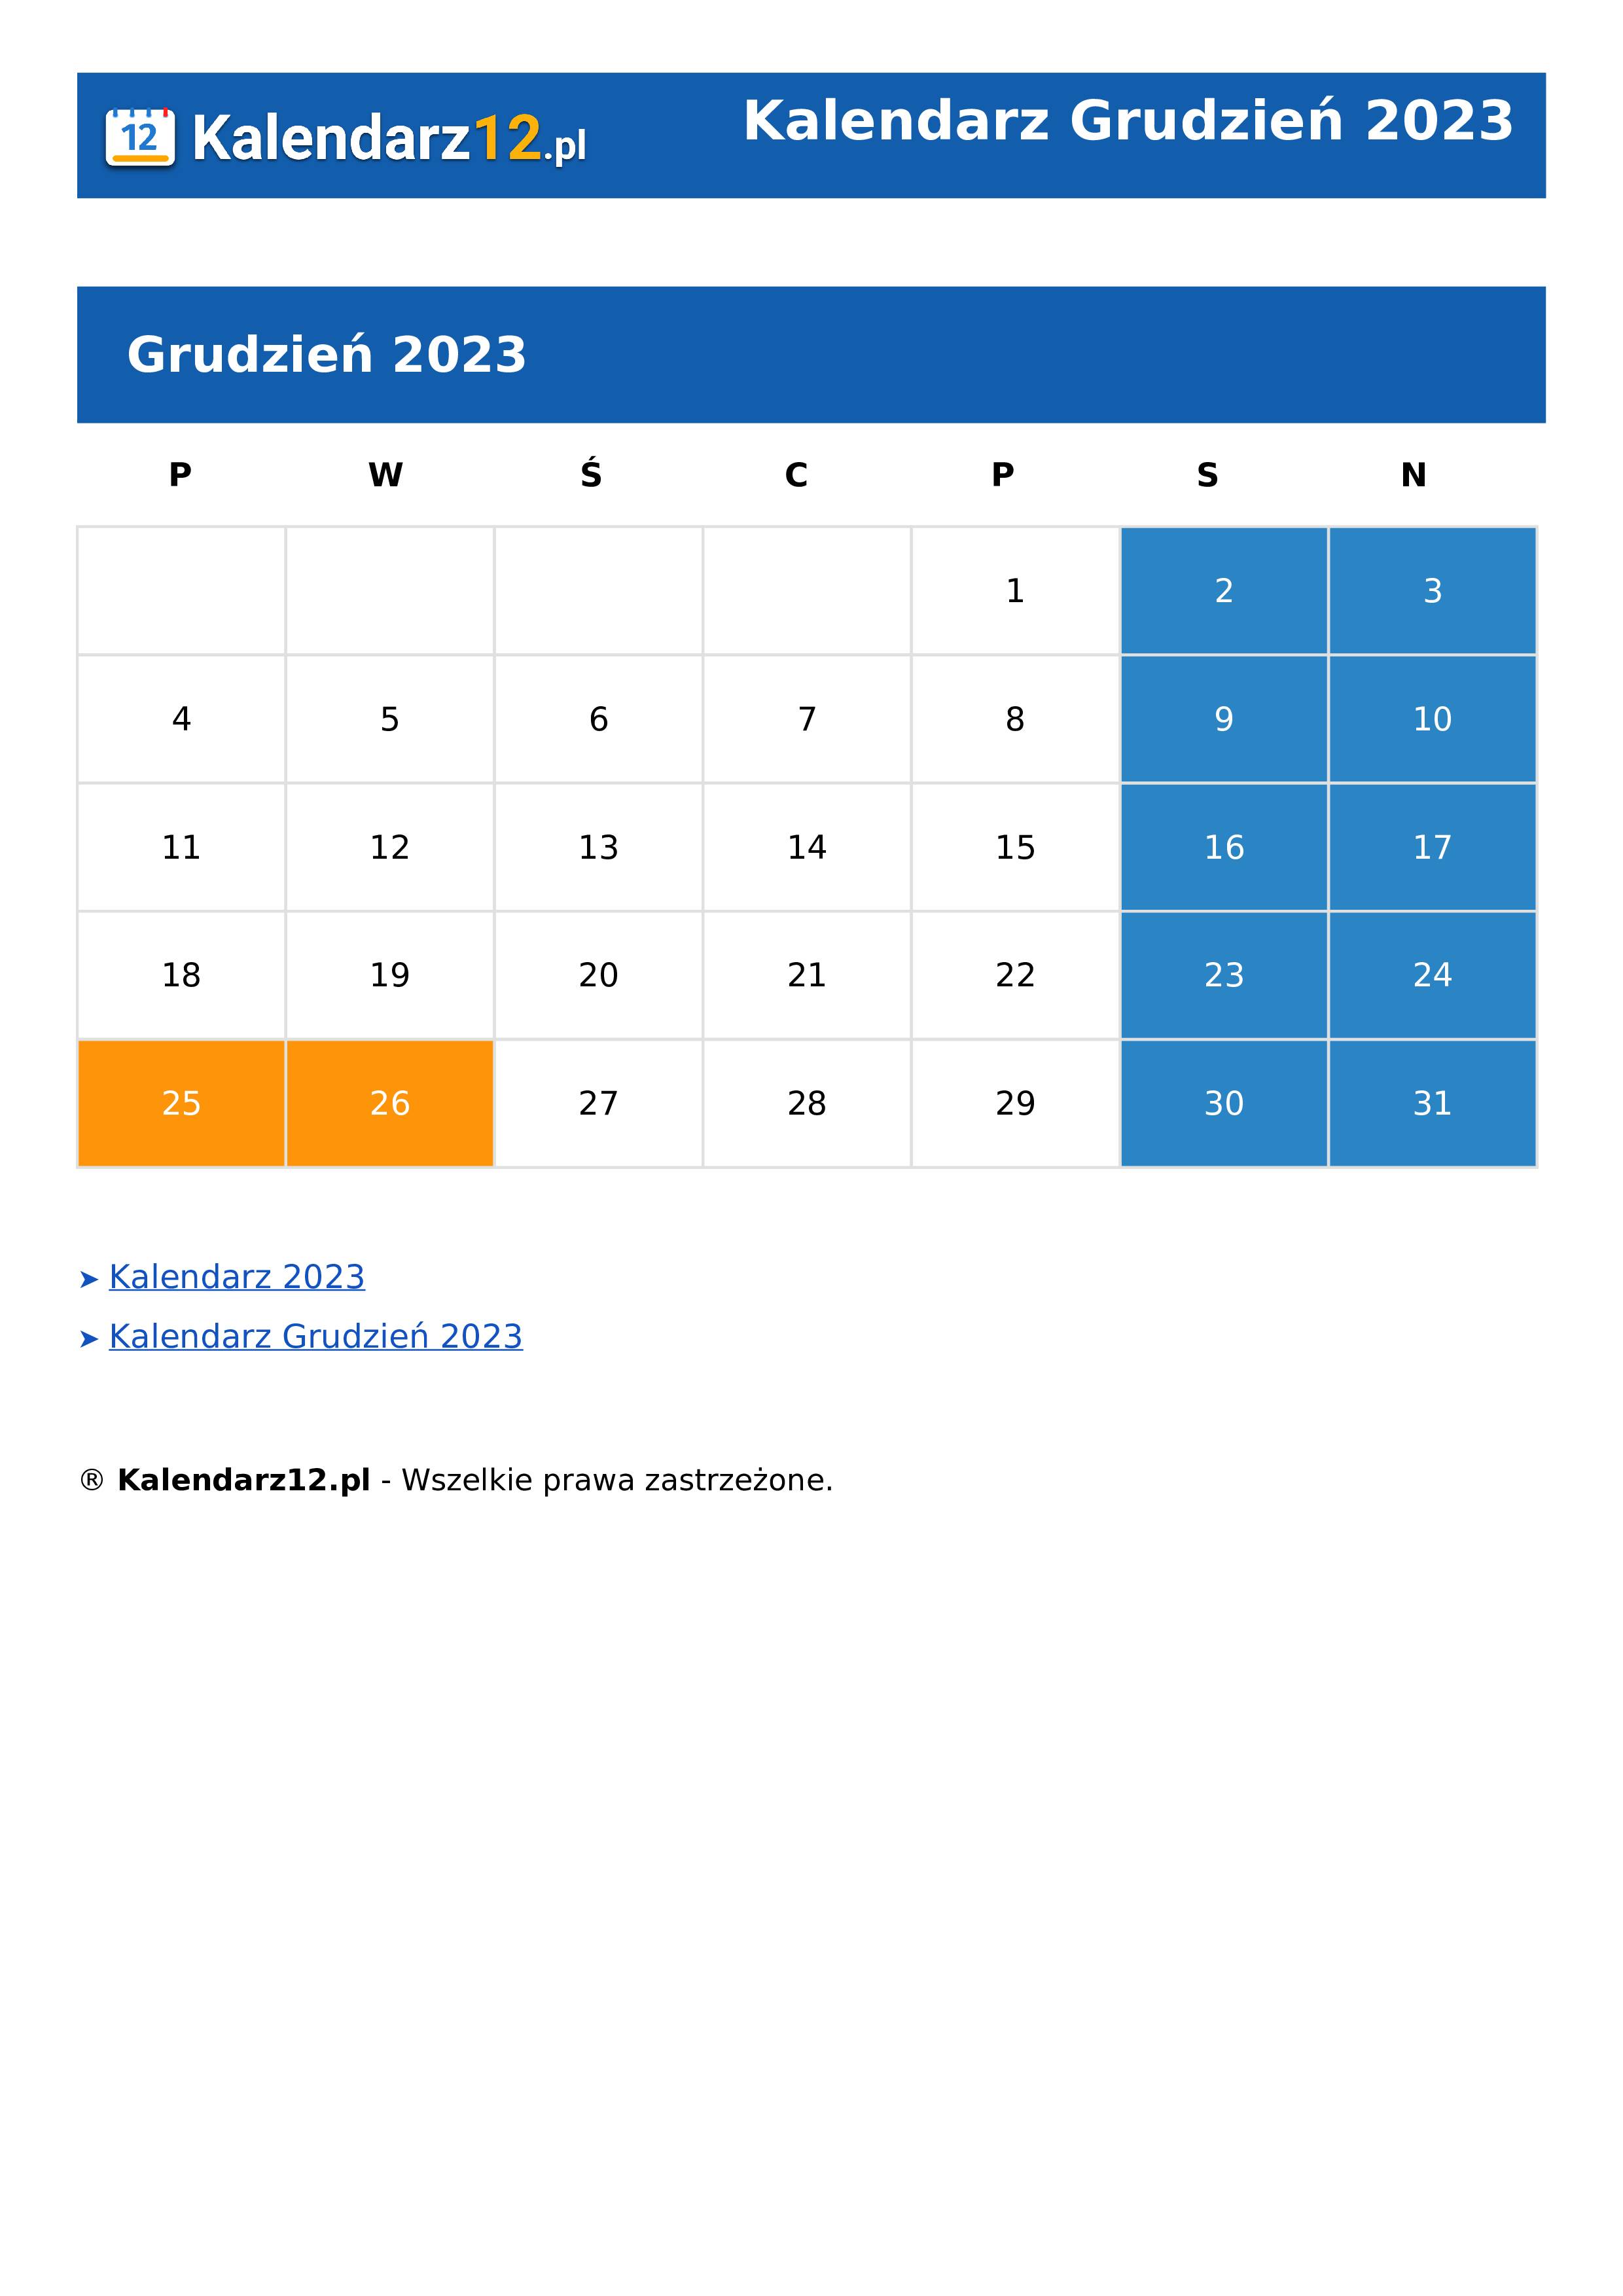 Calendar Grudzień 2023